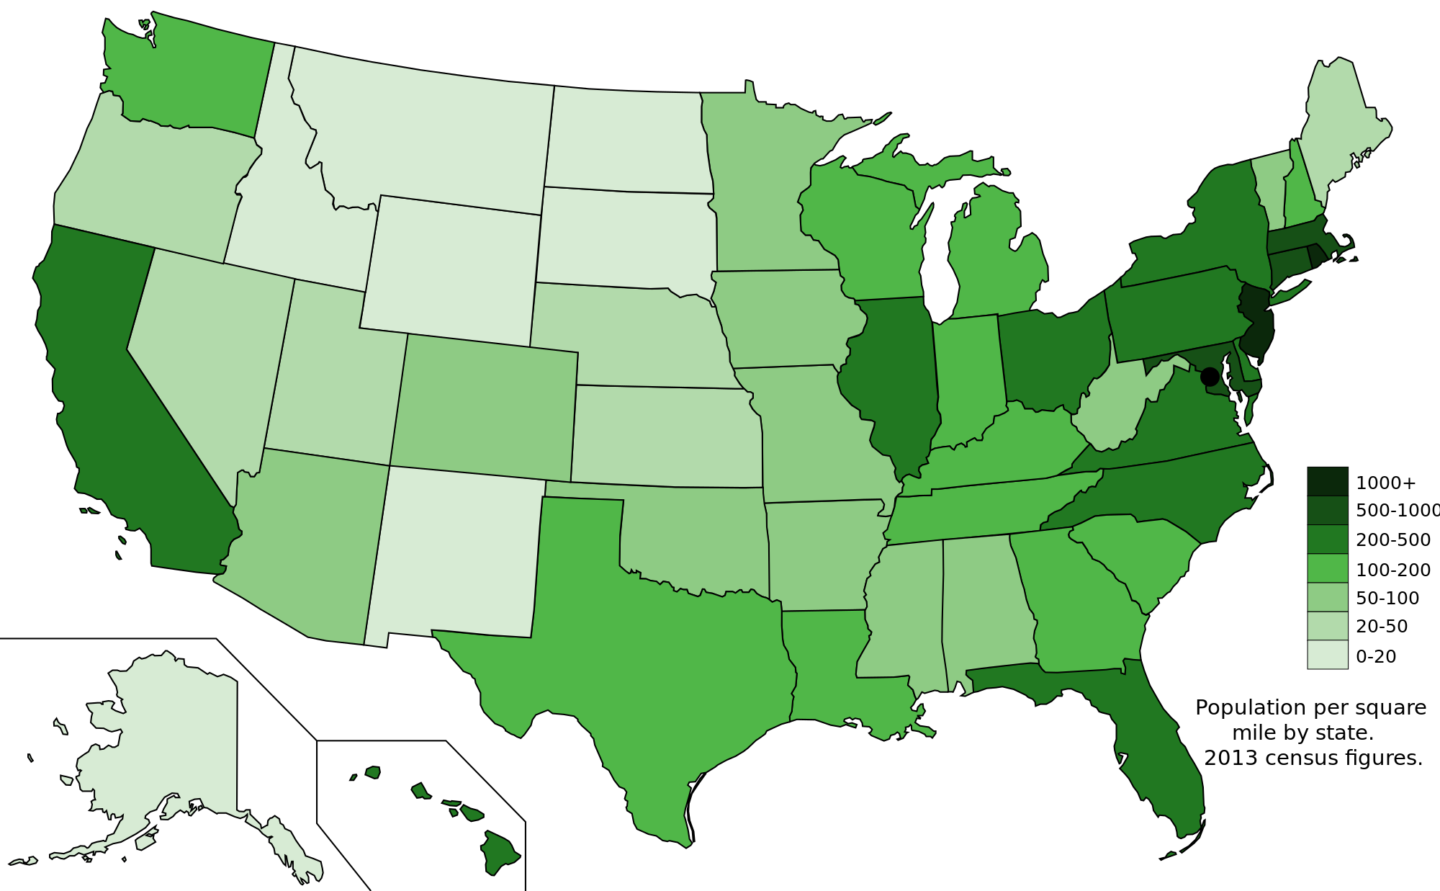 Population Density of US States